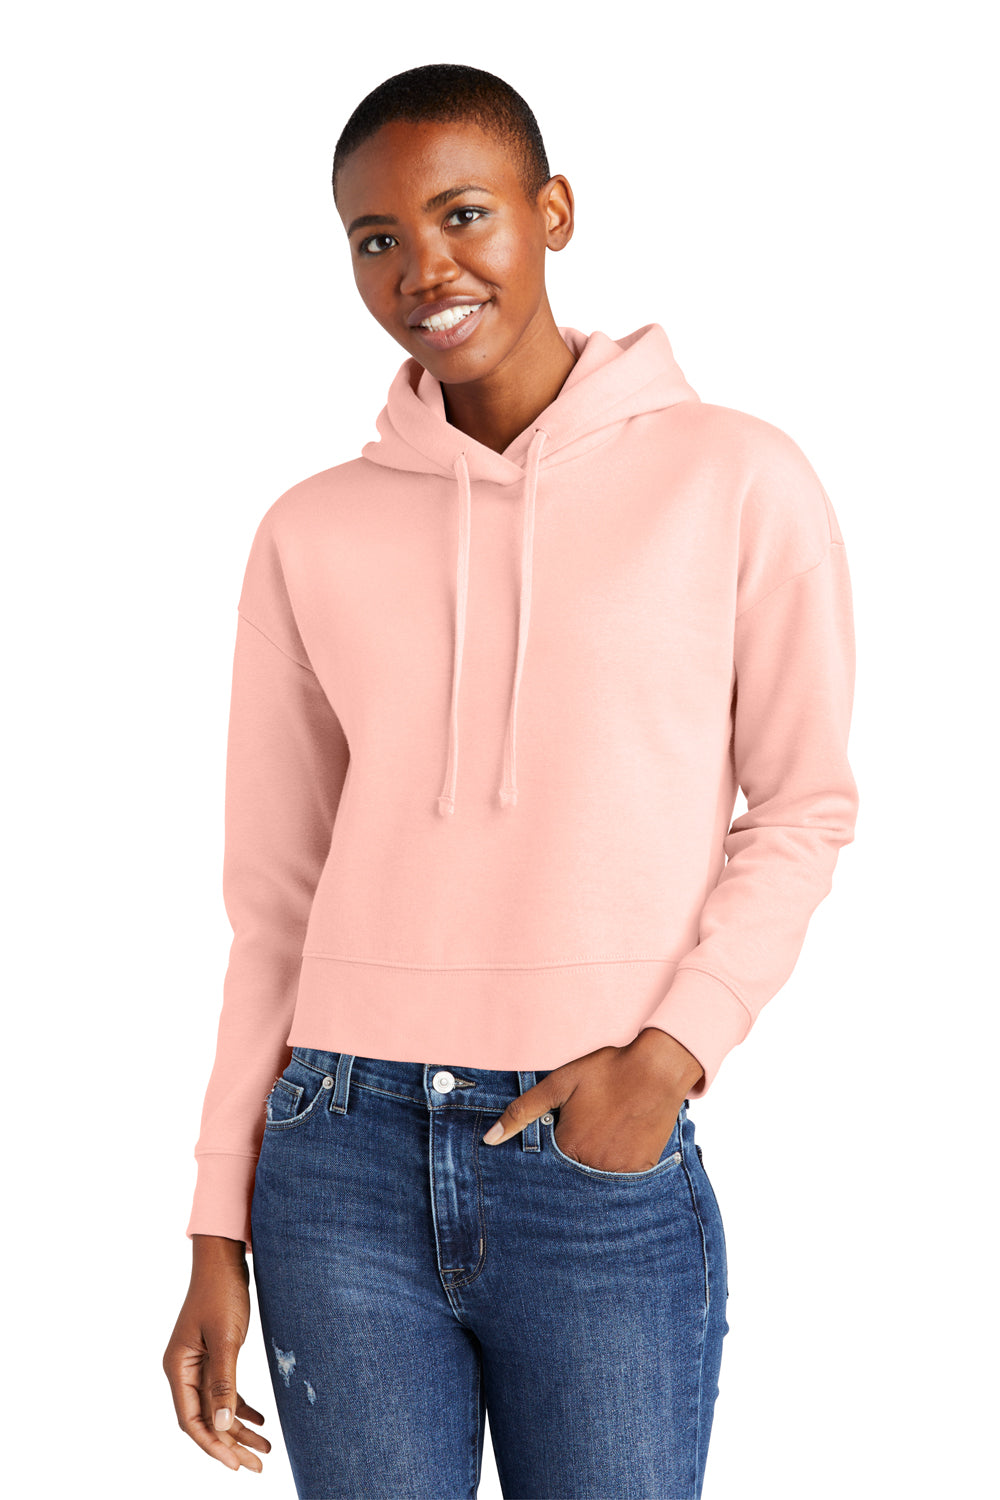 District DT6101 V.I.T. Fleece Hooded Sweatshirt Hoodie Rosewater Pink Front